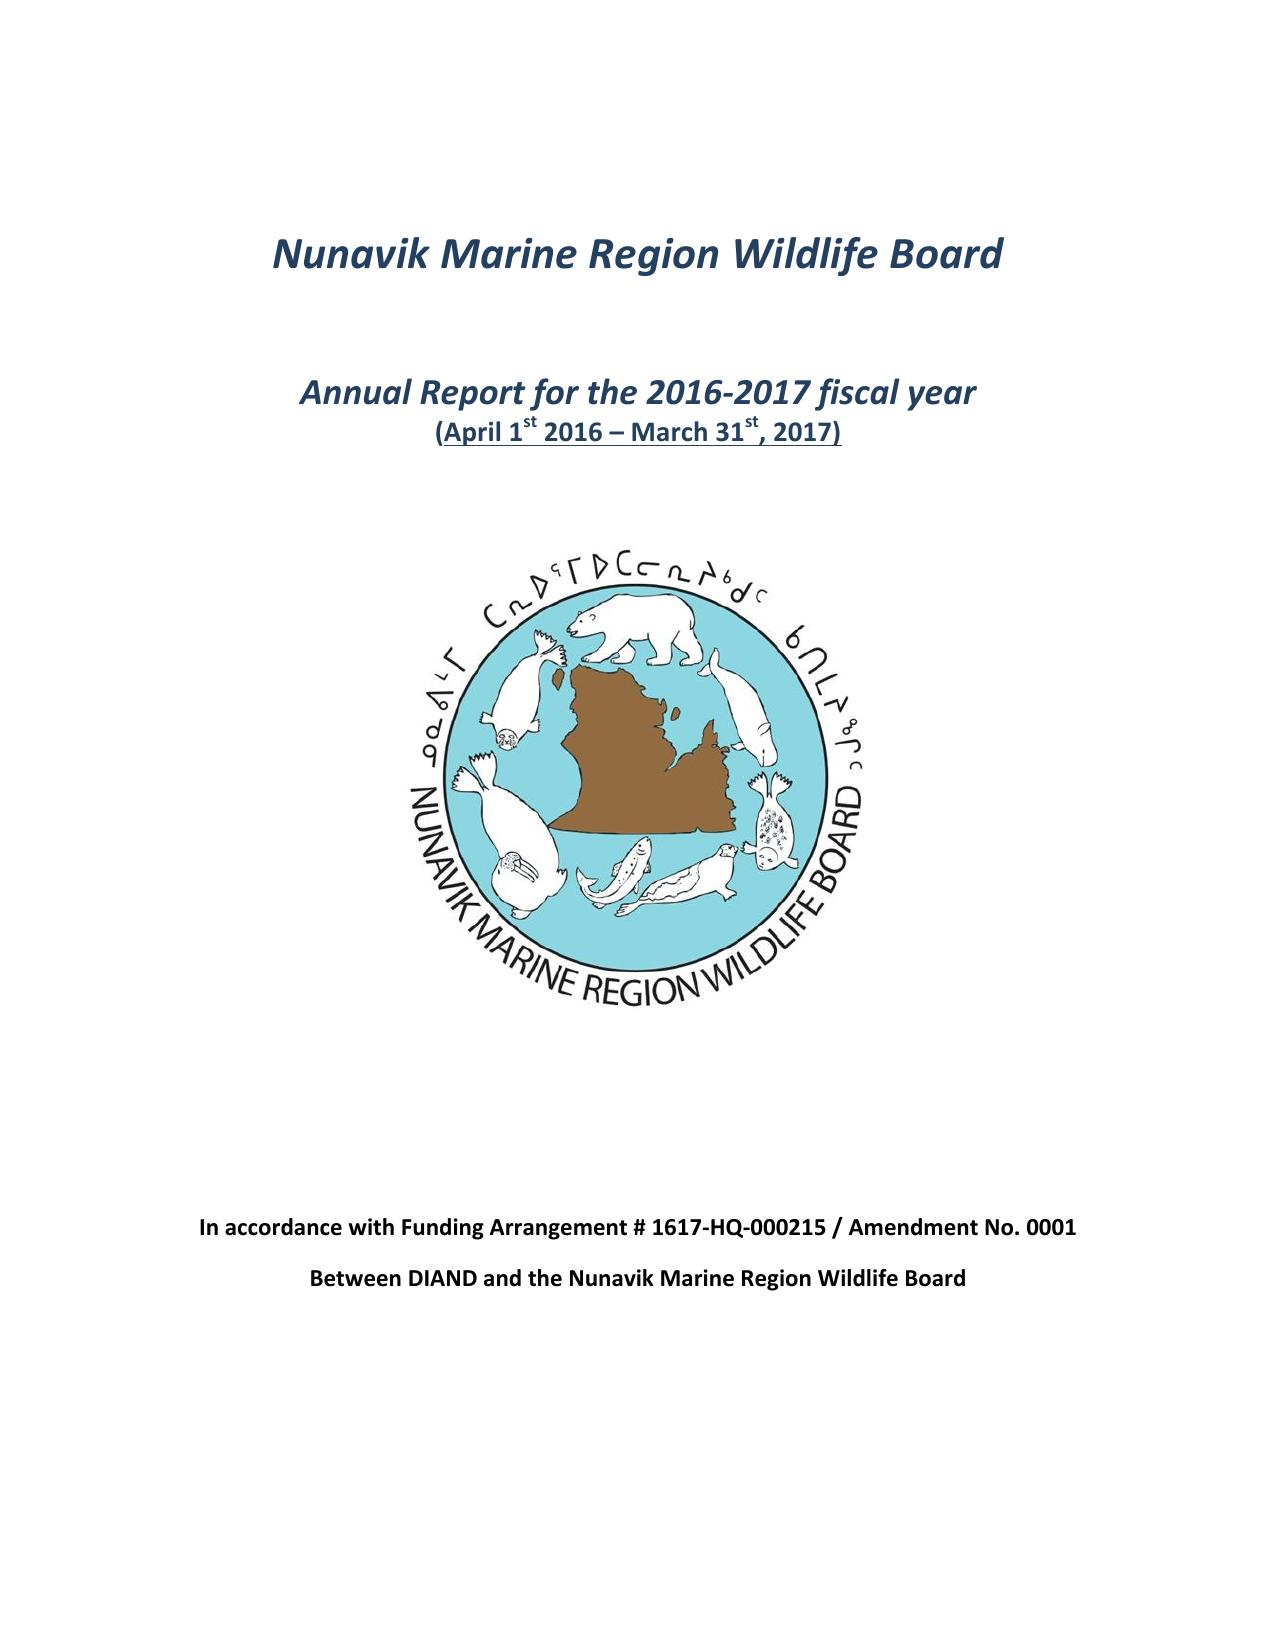 NMRWB Annual Report